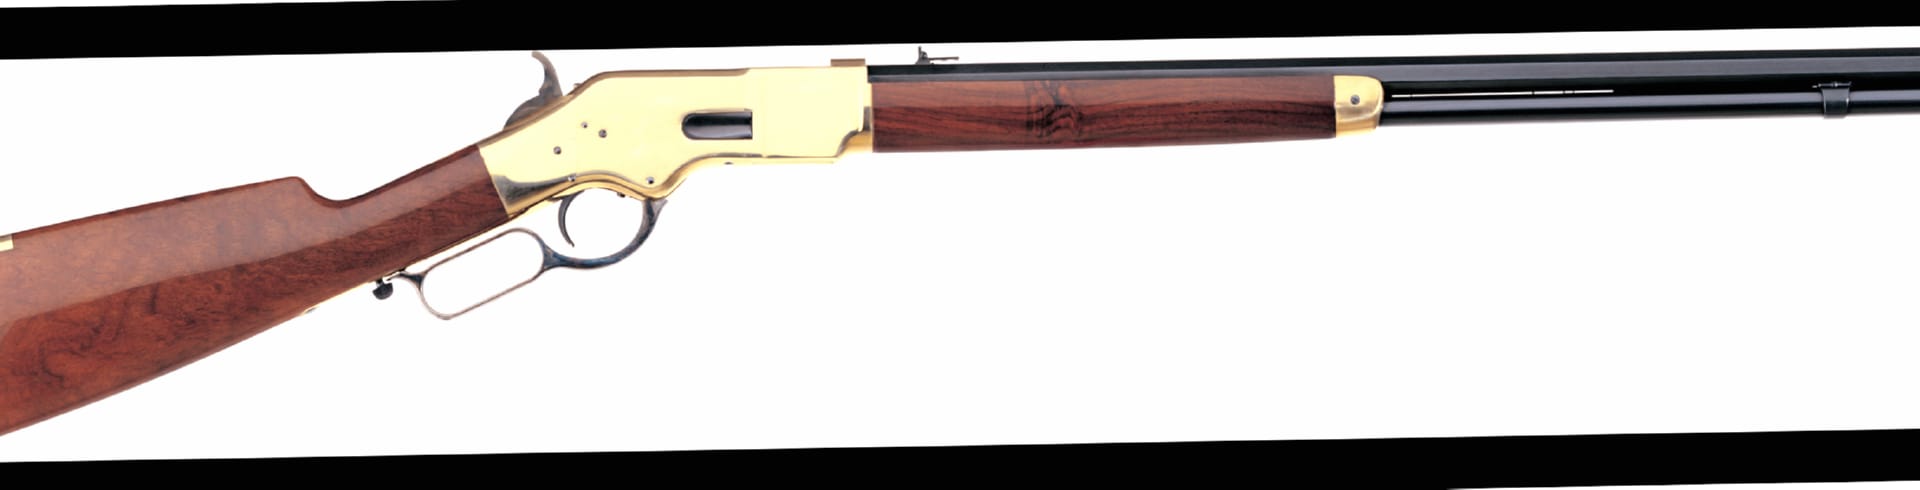 Uberti 1866 Yellowboy Rifle at 640 x 960 iPhone 4 size wallpapers HD quality